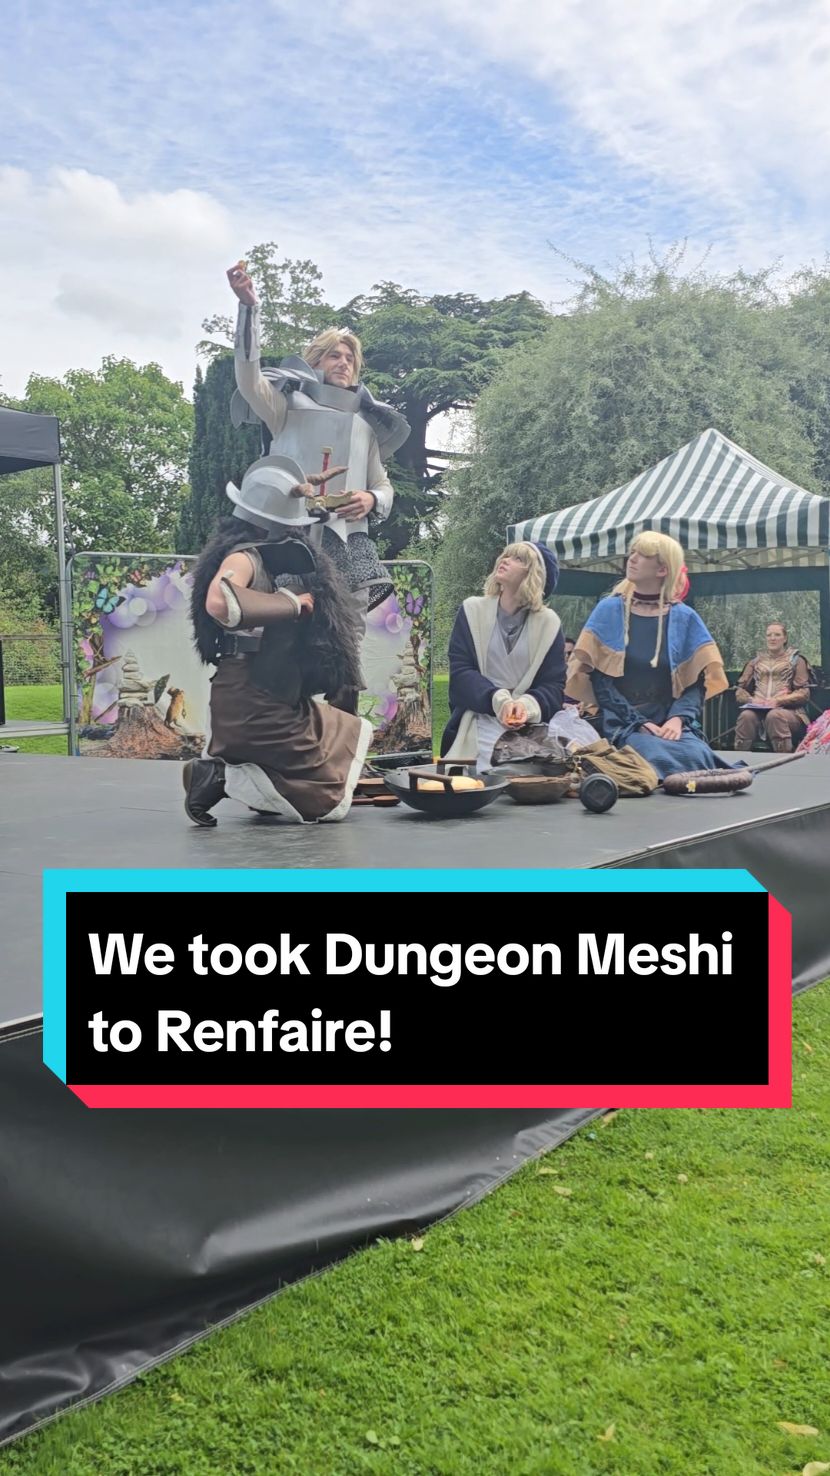 We took Dungeon Meshi to Renfaire 🥳 @Cap Coch Cosplay🔜FantasyFores @Seph @Lux  #Renfaire #DungeonMeshi #DeliciousInDungeon #Cosplay #Cosplaying 